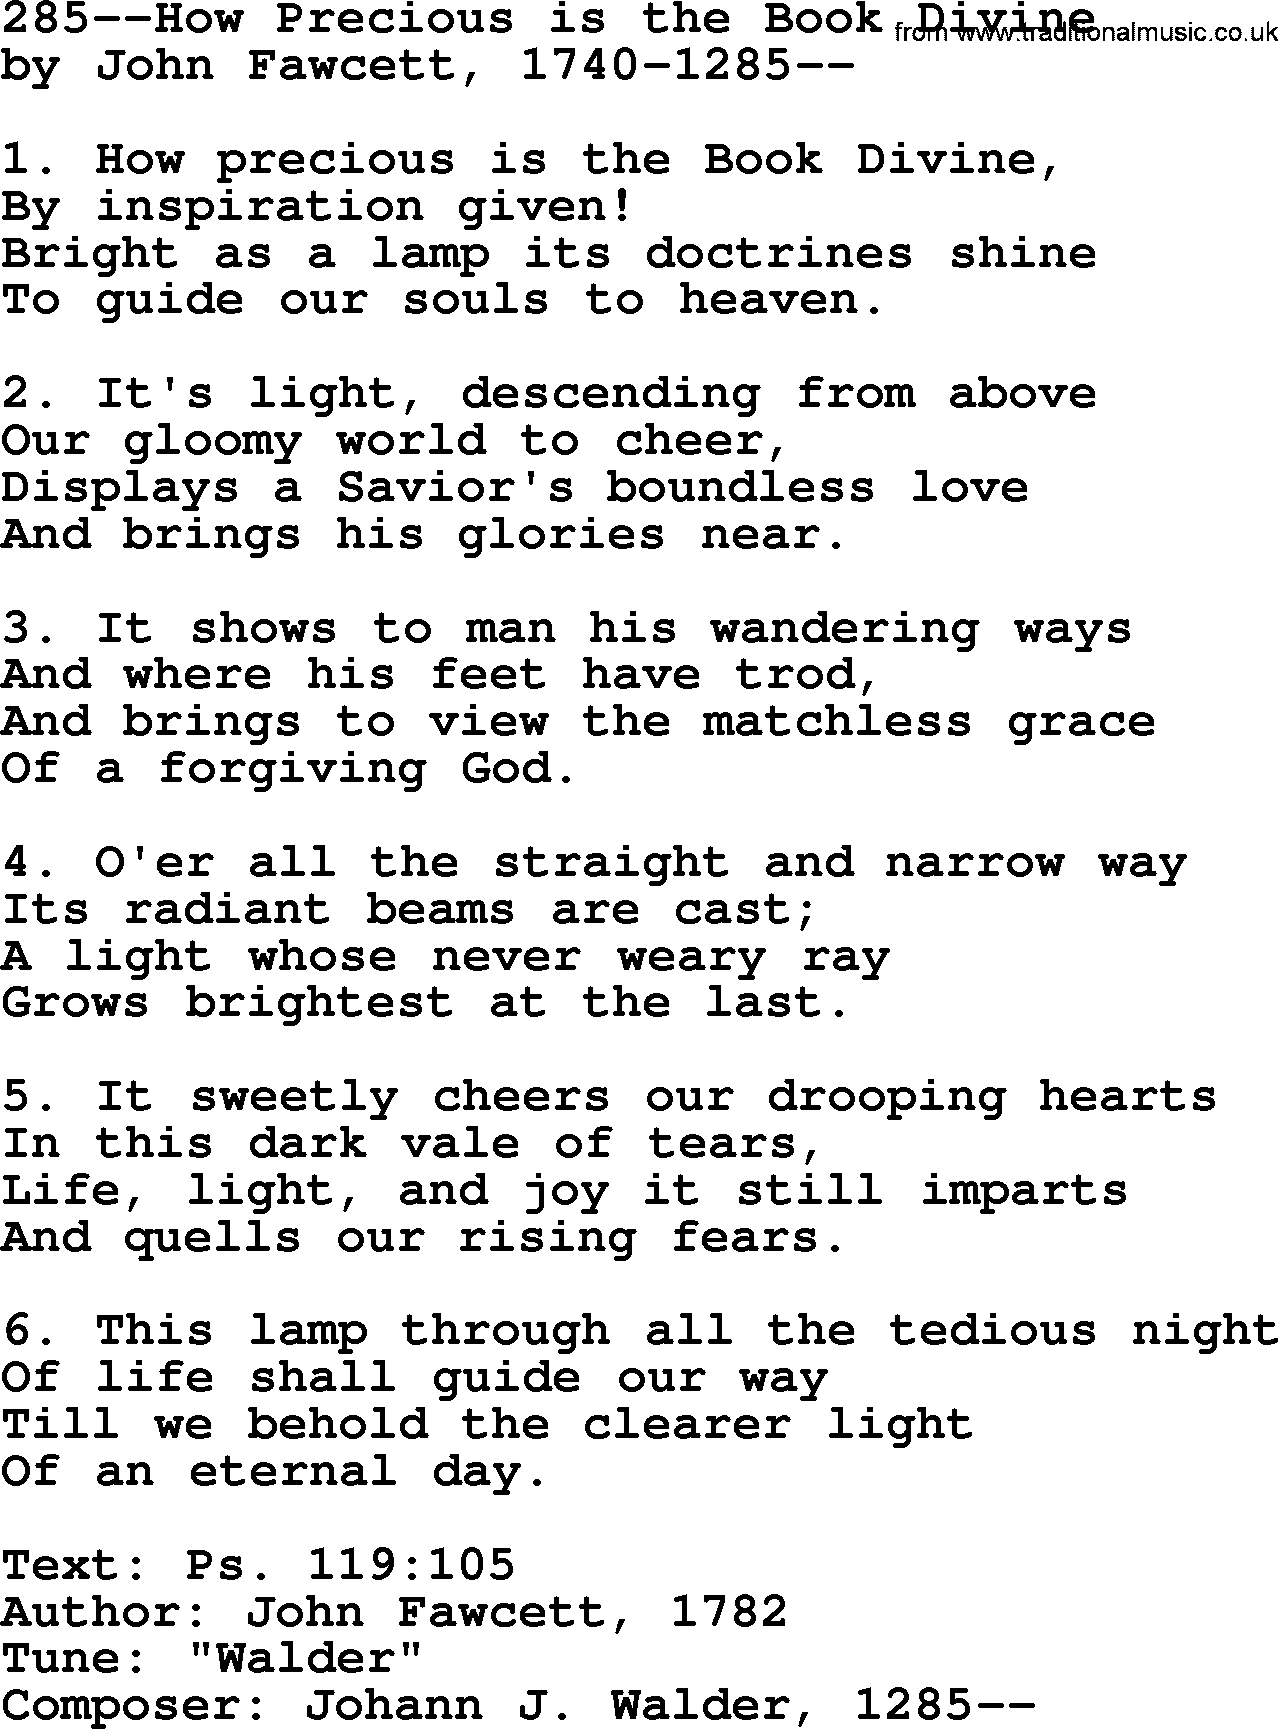 Lutheran Hymn: 285--How Precious is the Book Divine.txt lyrics with PDF